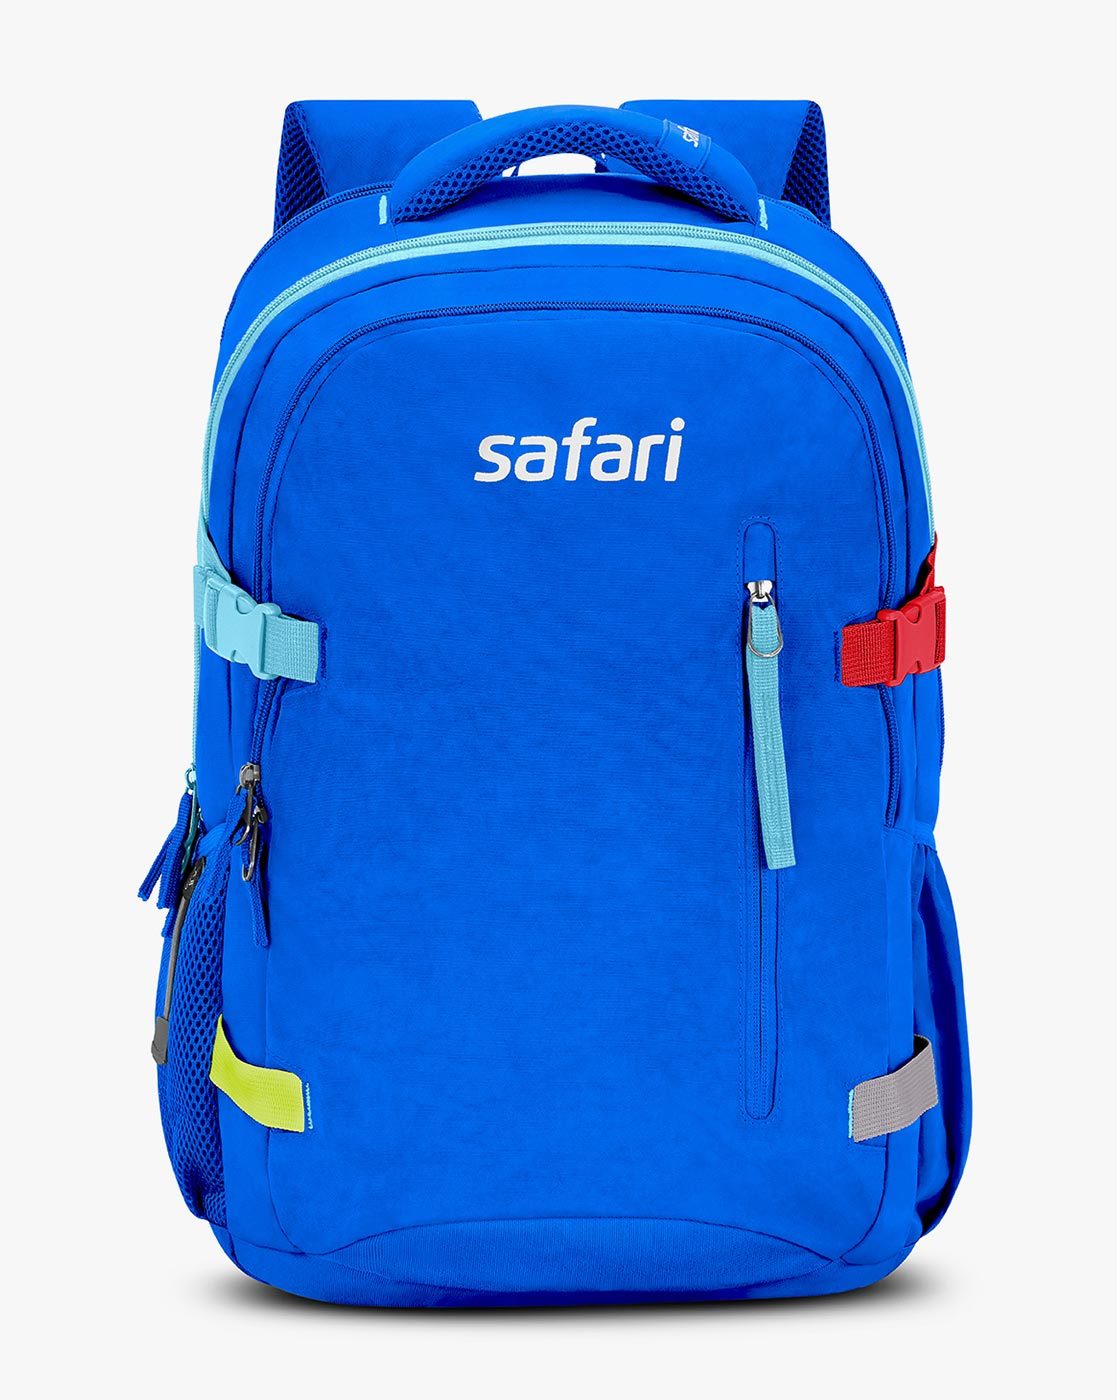 Share more than 130 safari school bags under 500 super hot - kidsdream ...